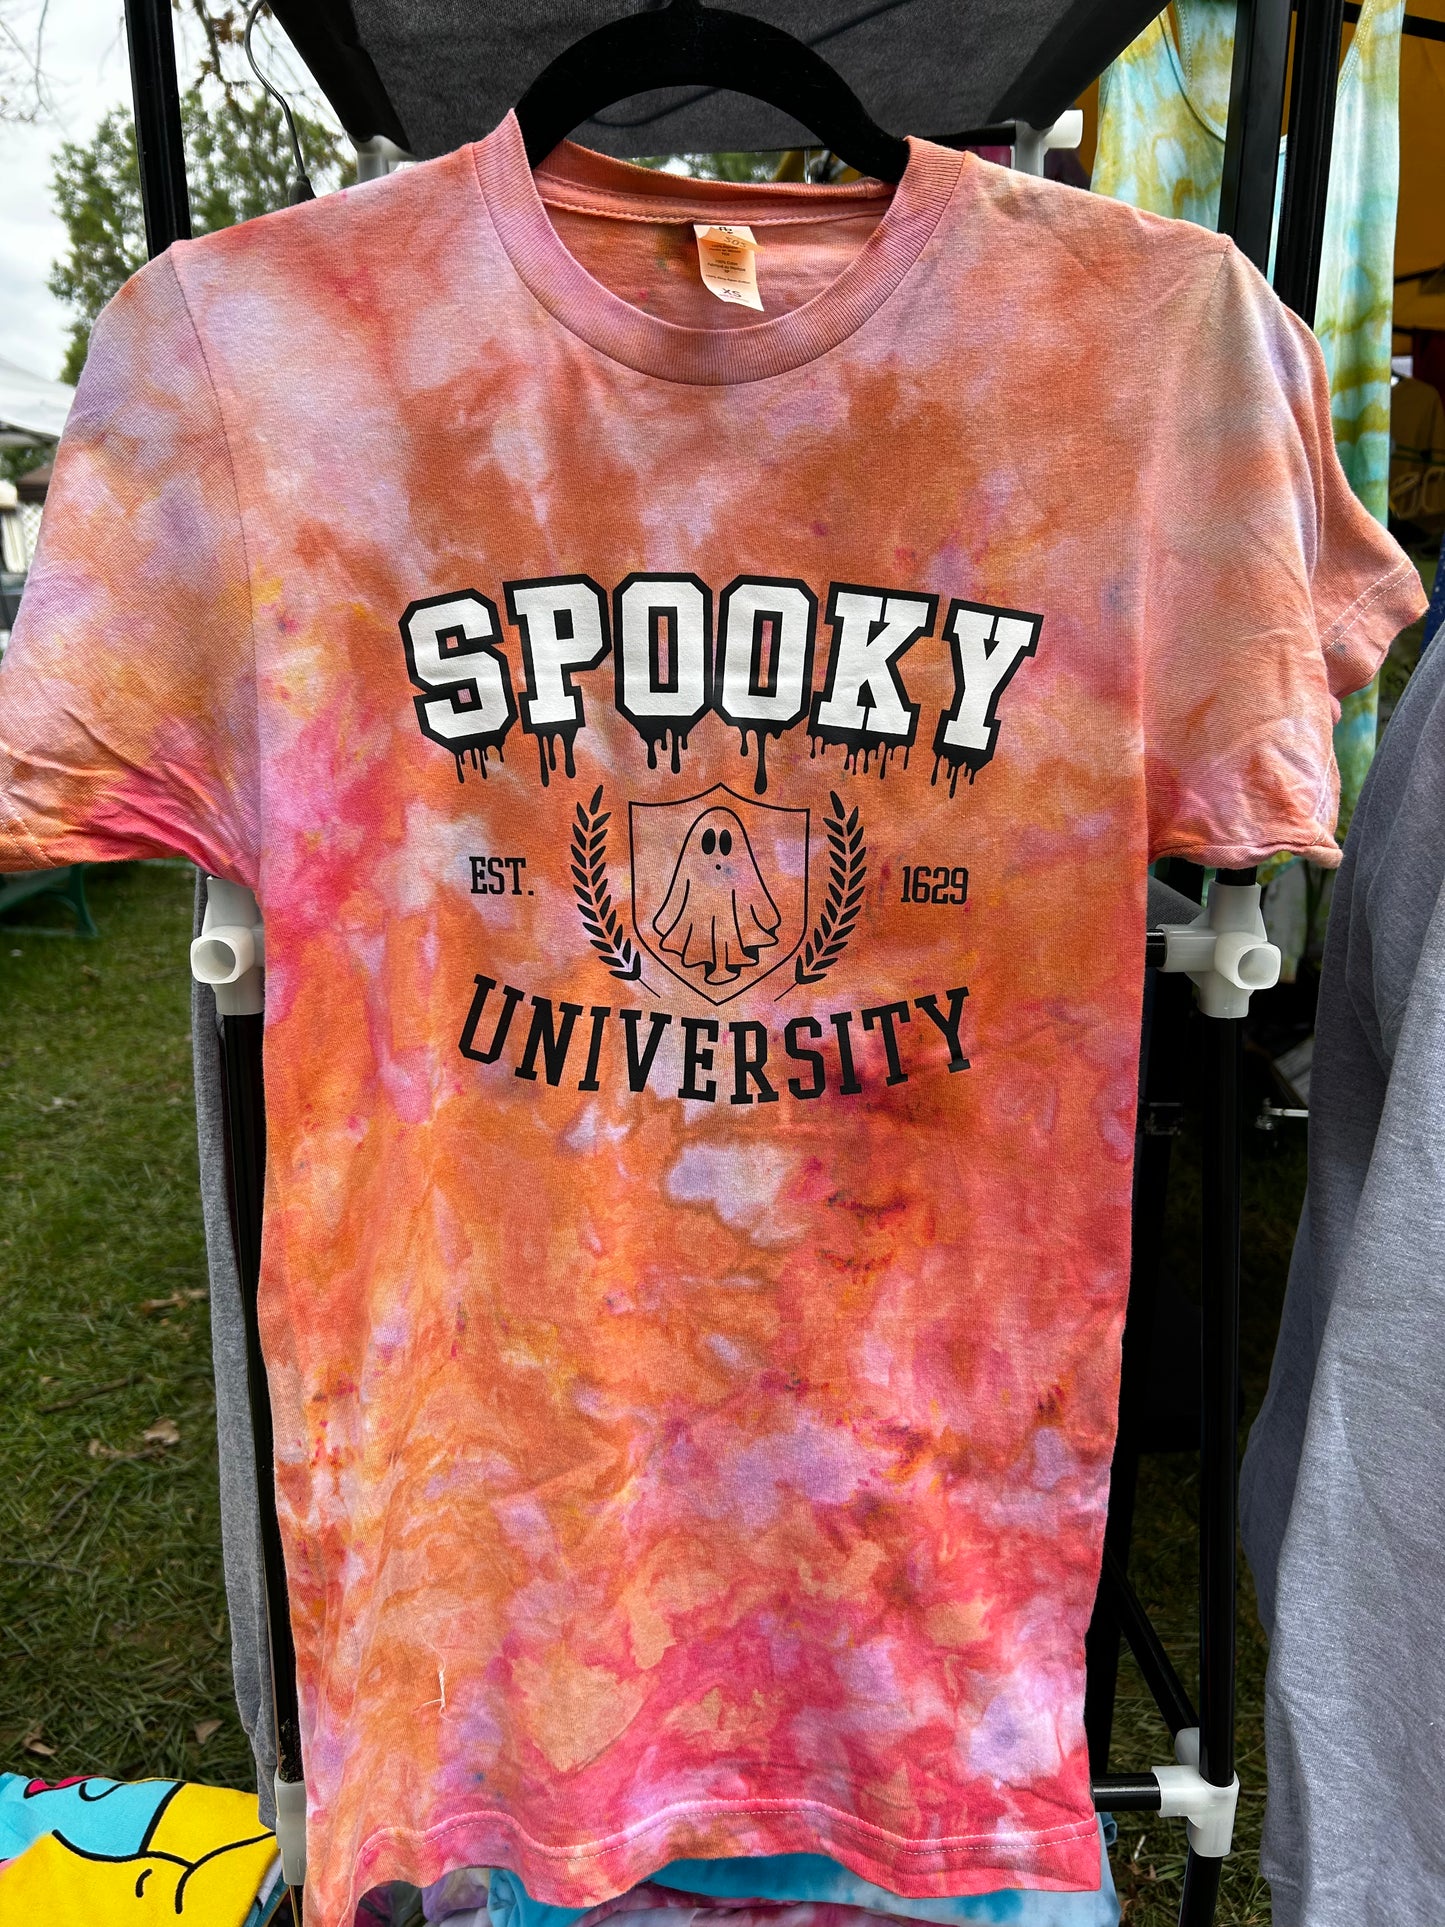 Spooky university tee